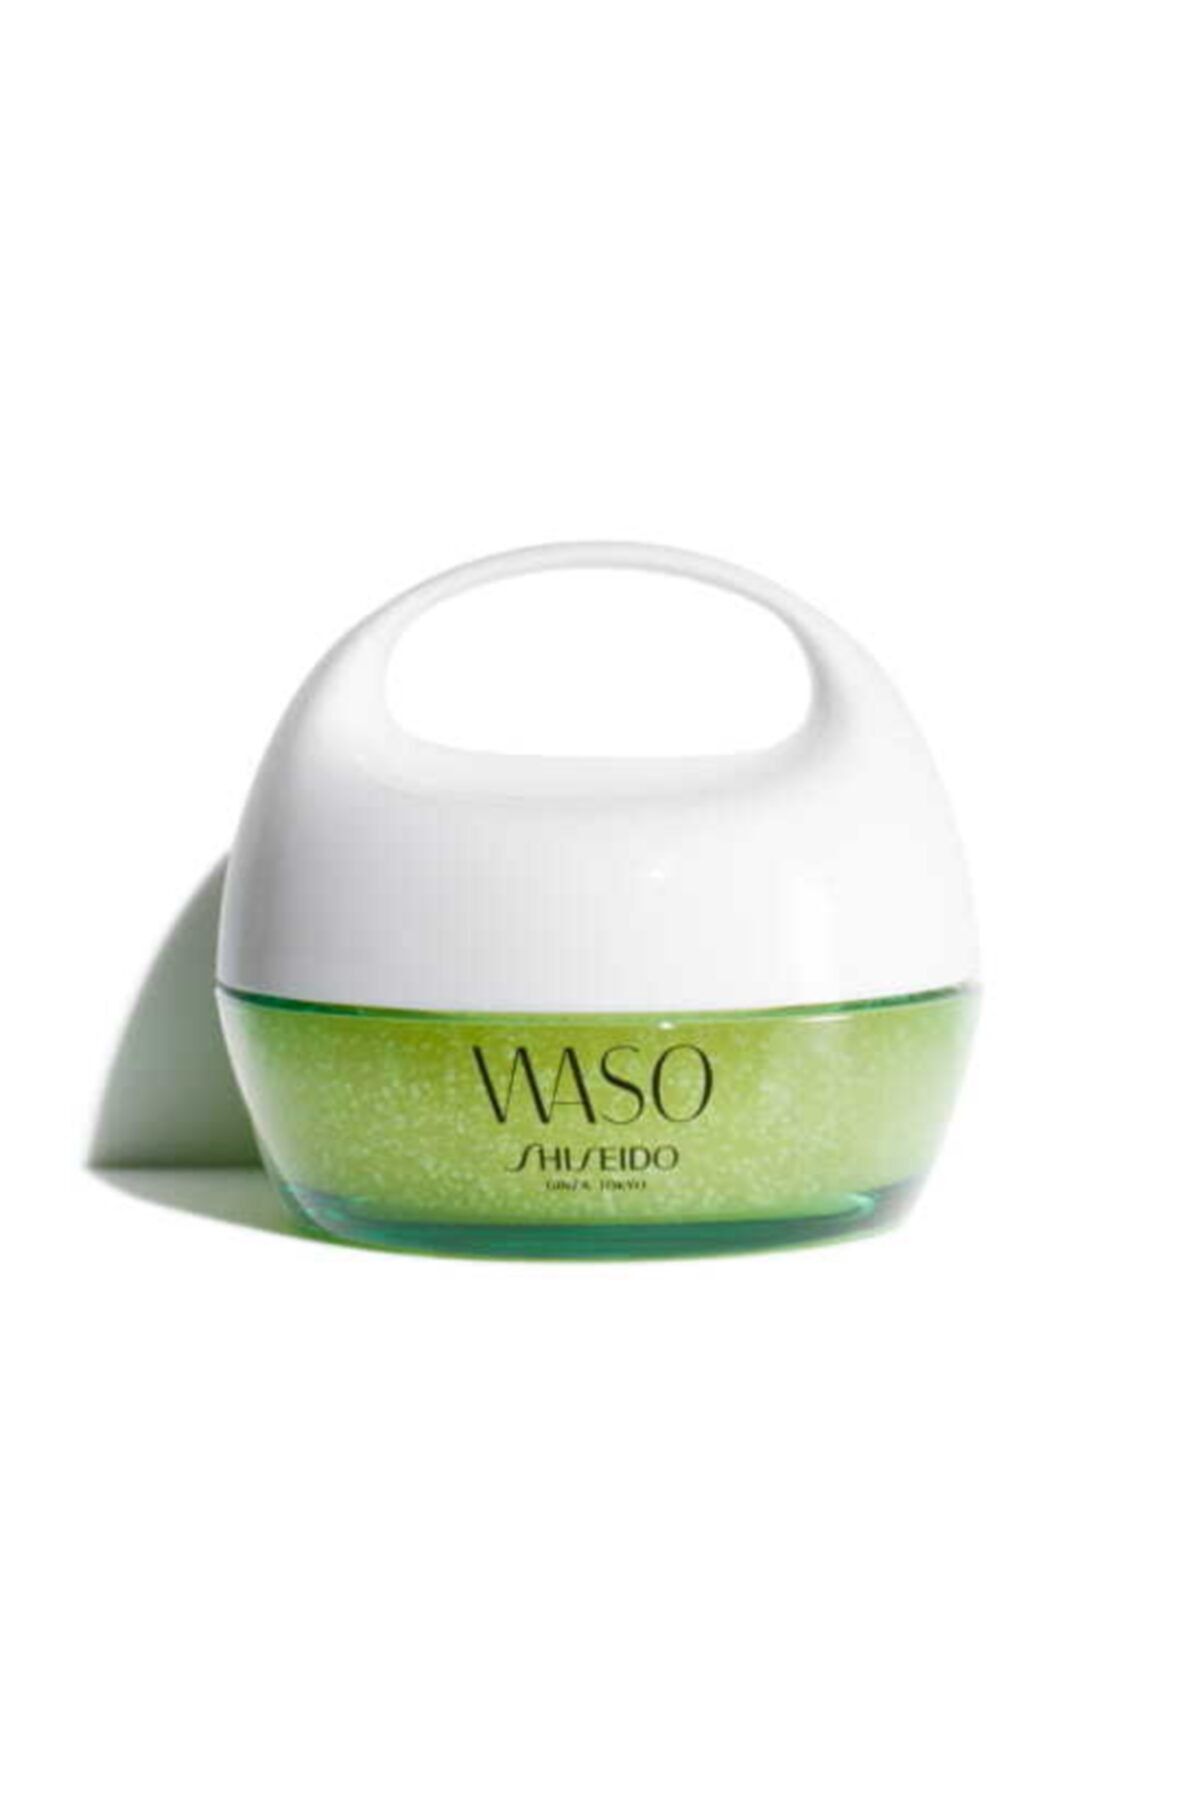 Shiseido Waso Beauty Sleeping Mask 80 Ml - Gece Nem Maskesi